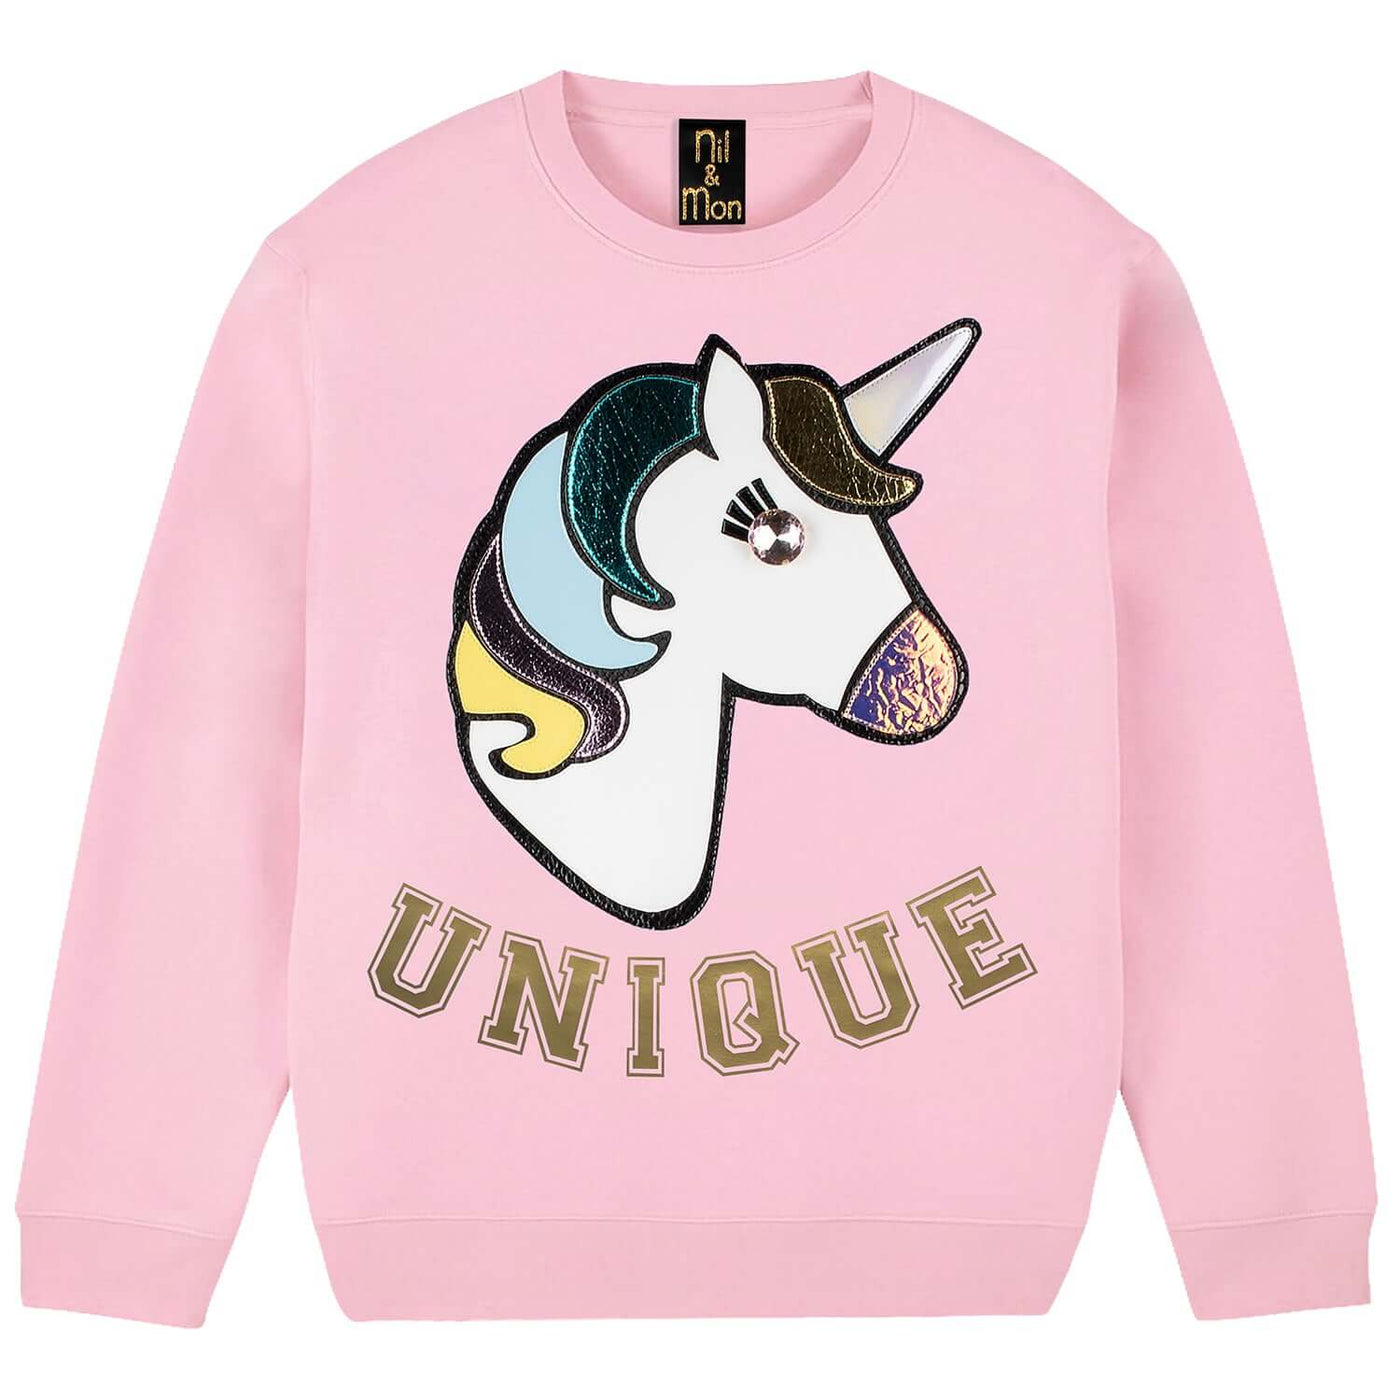 Sweatshirt "Unique" - light pink